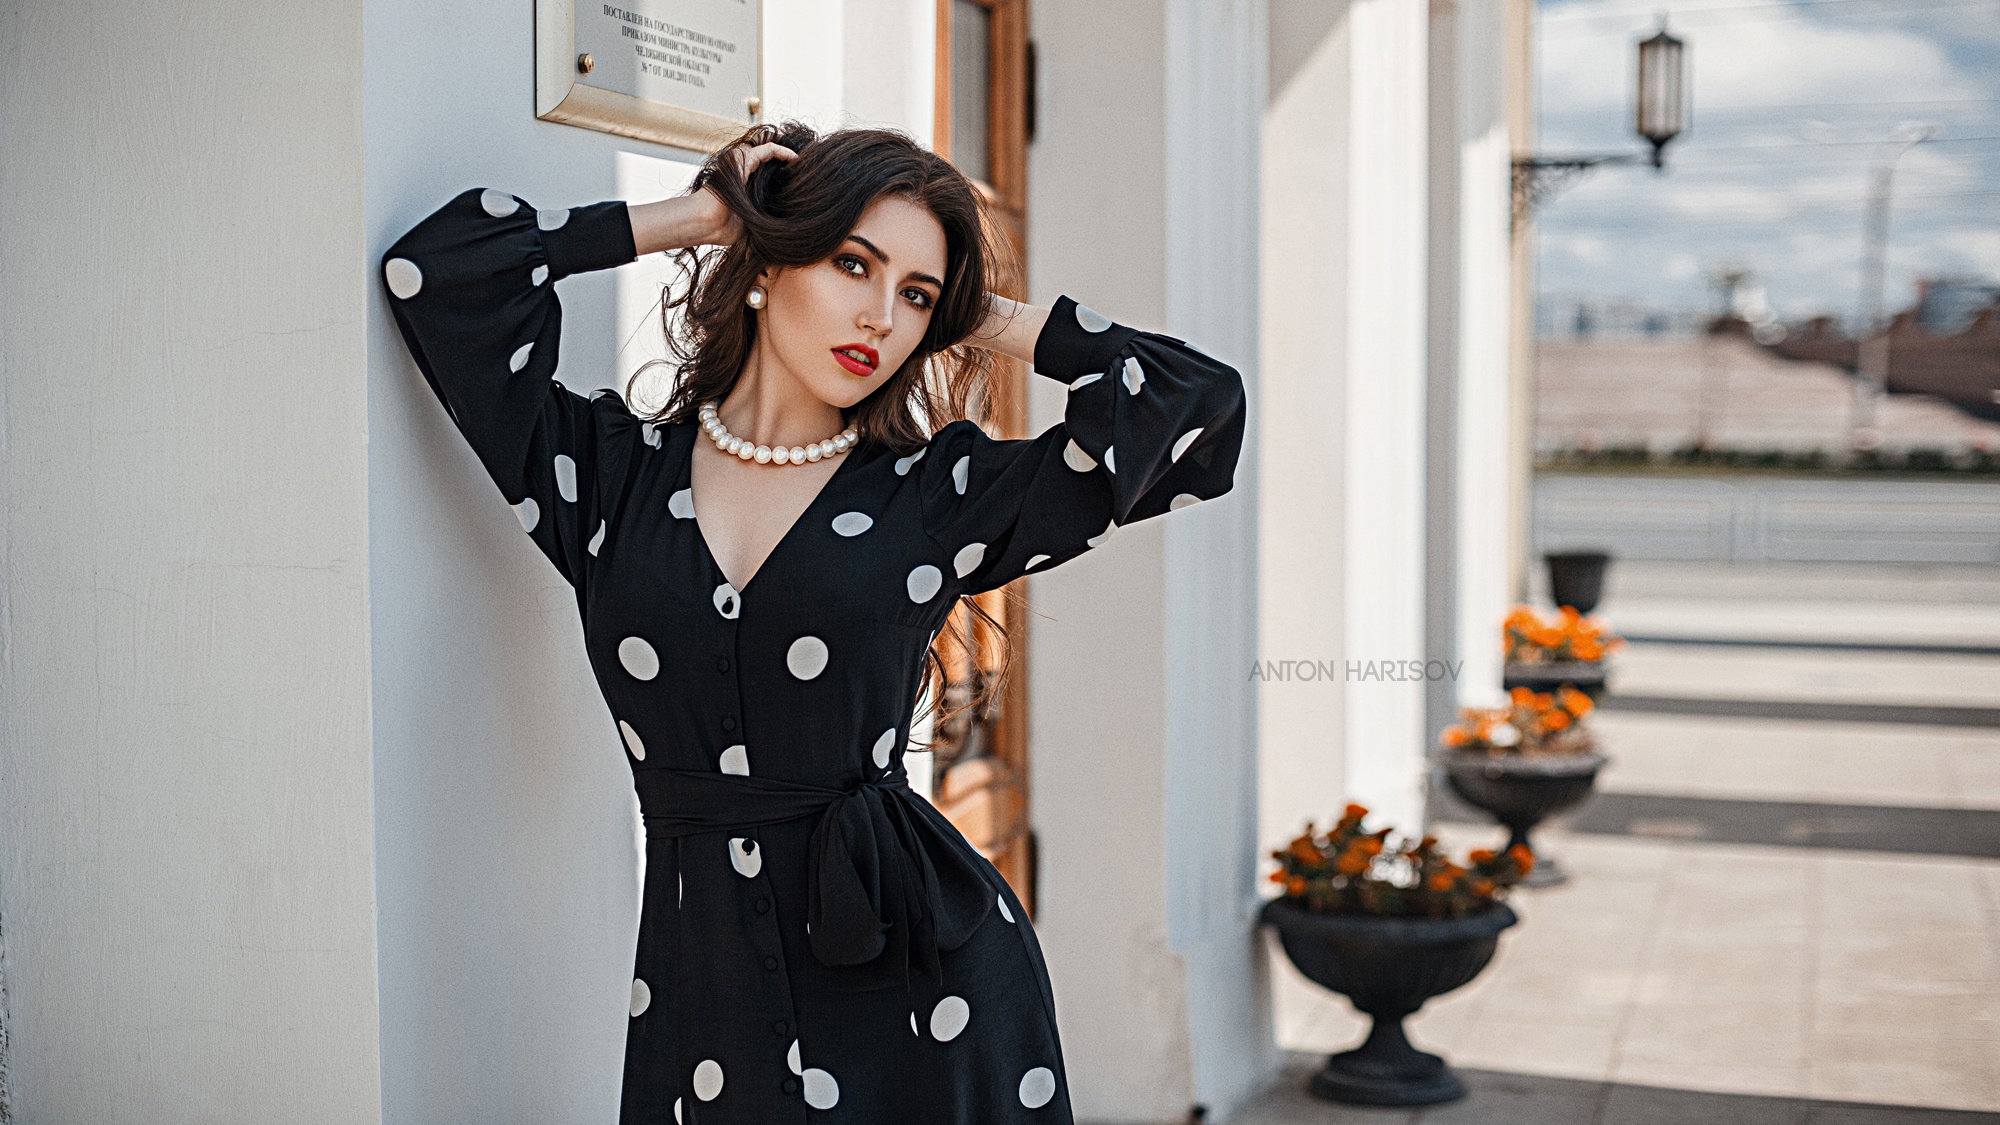 People 2000x1125 women model black dress necklace red lipstick hands in hair standing outdoors Anton Harisov Maria Bashmakova